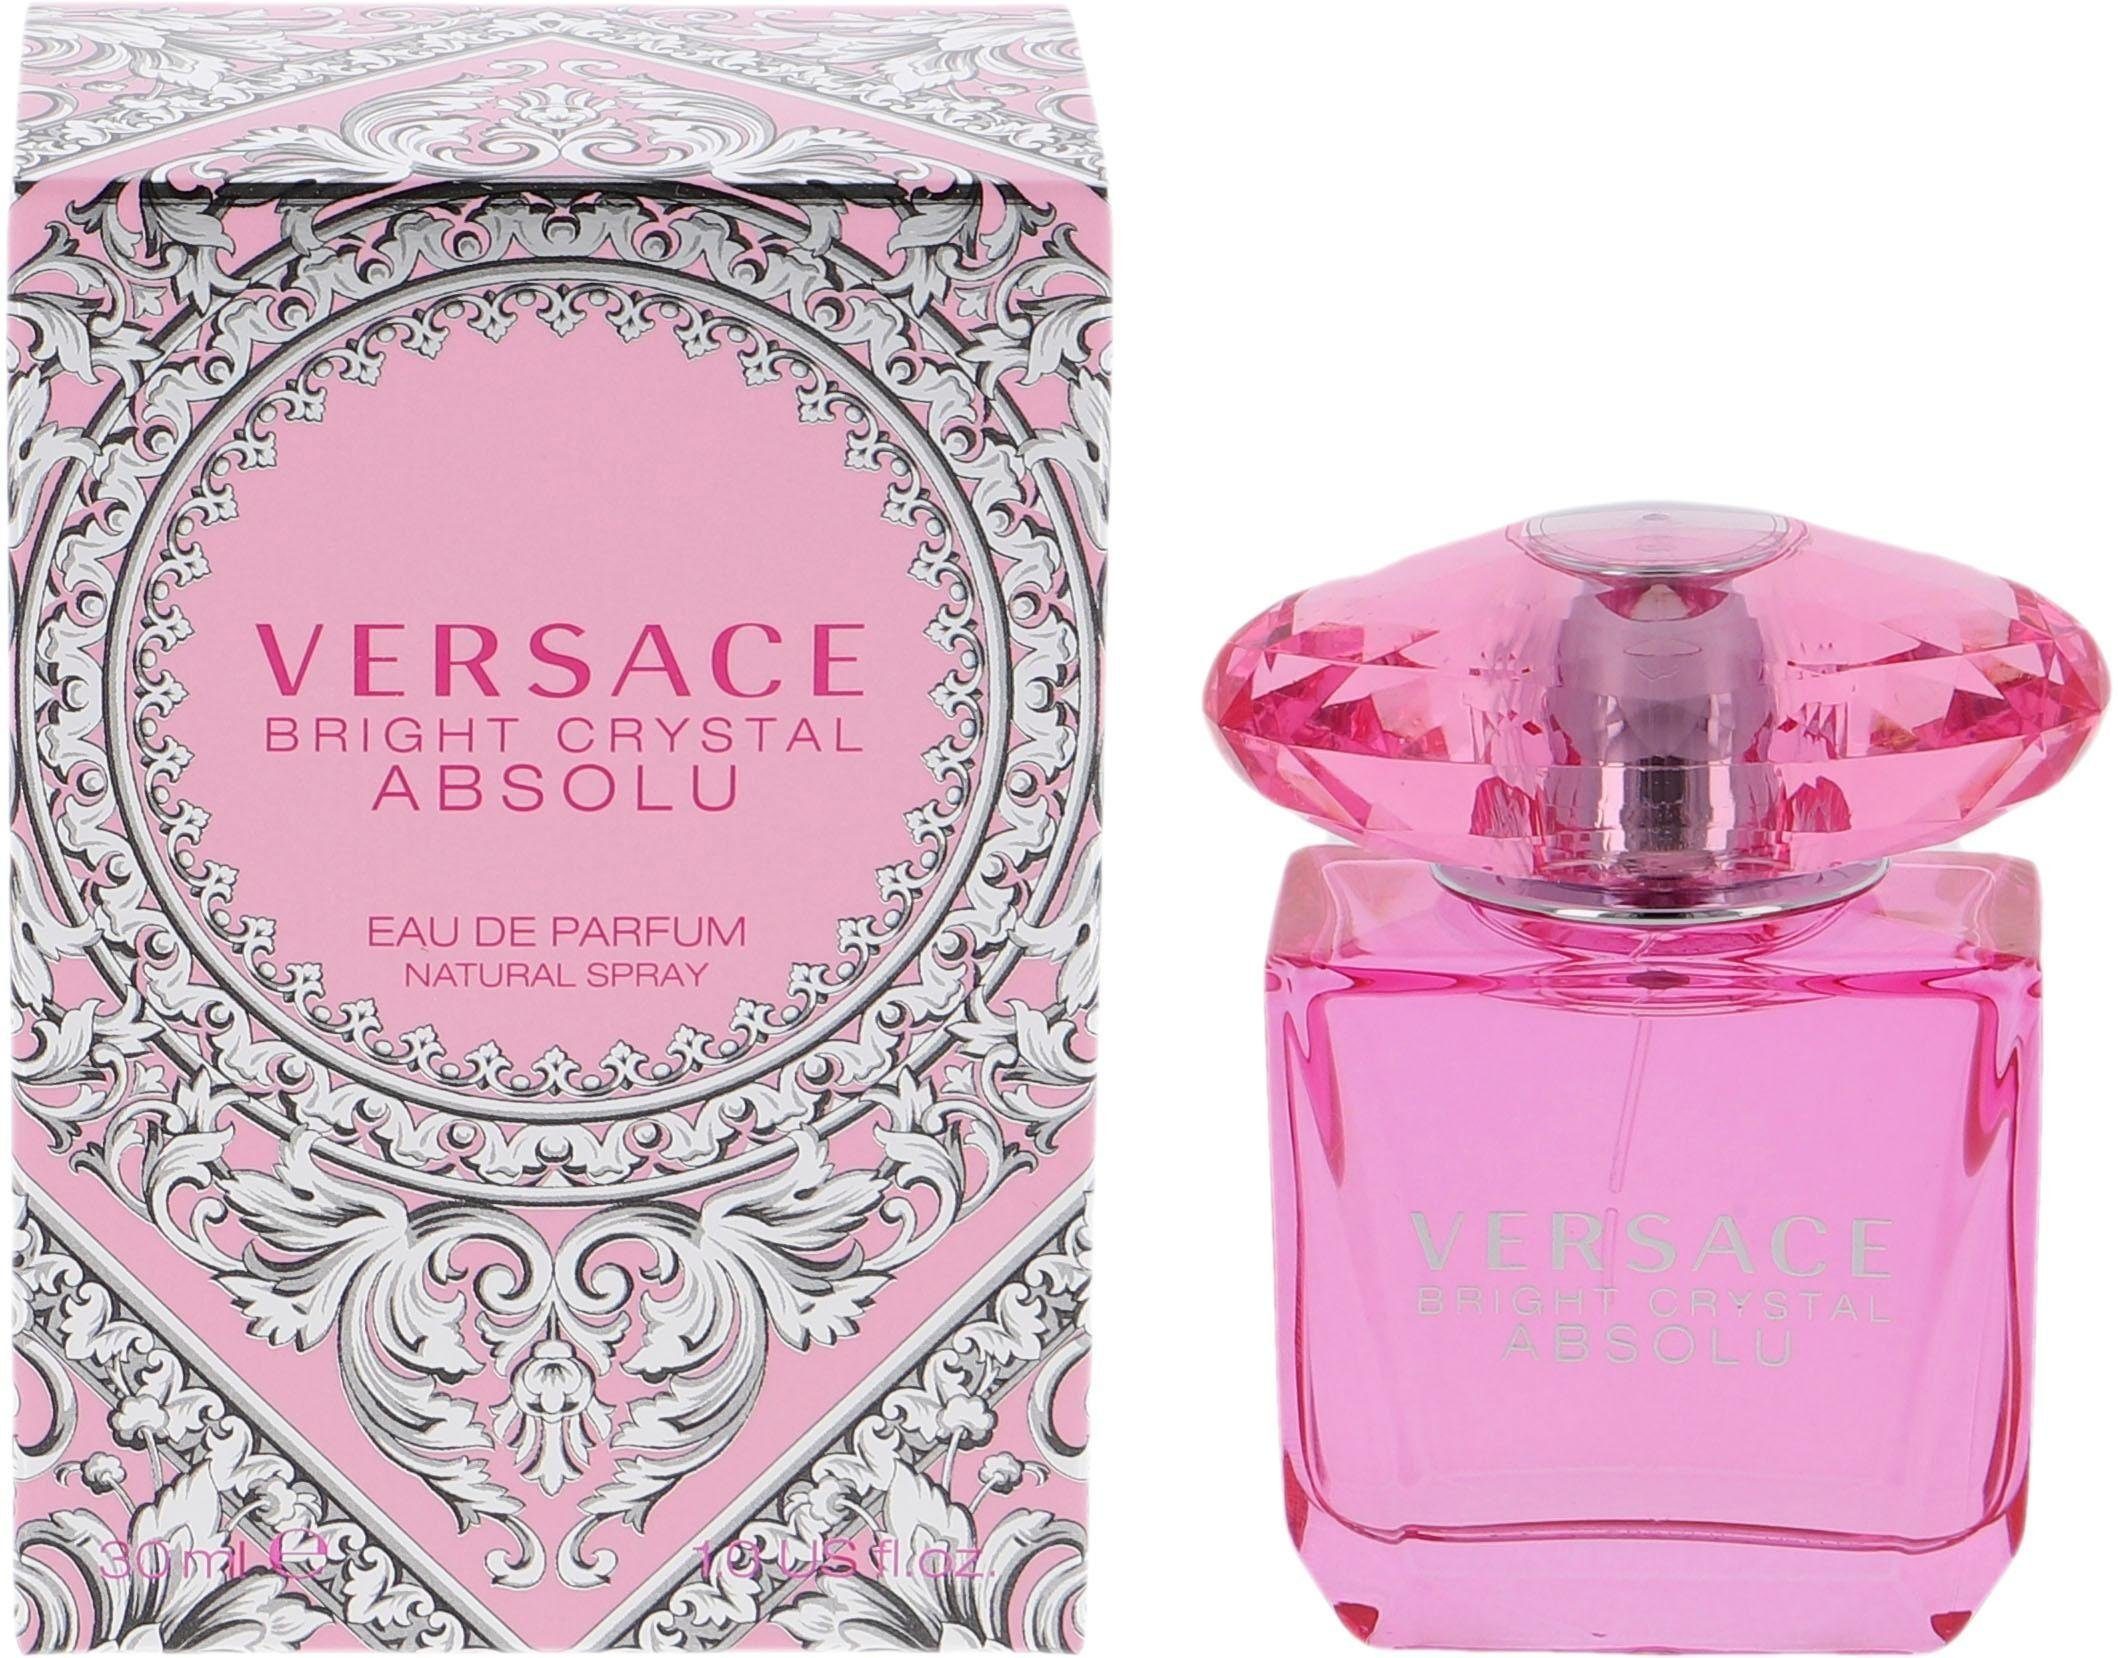 Versace de Bright Crystal Absolu Parfum Versace Eau